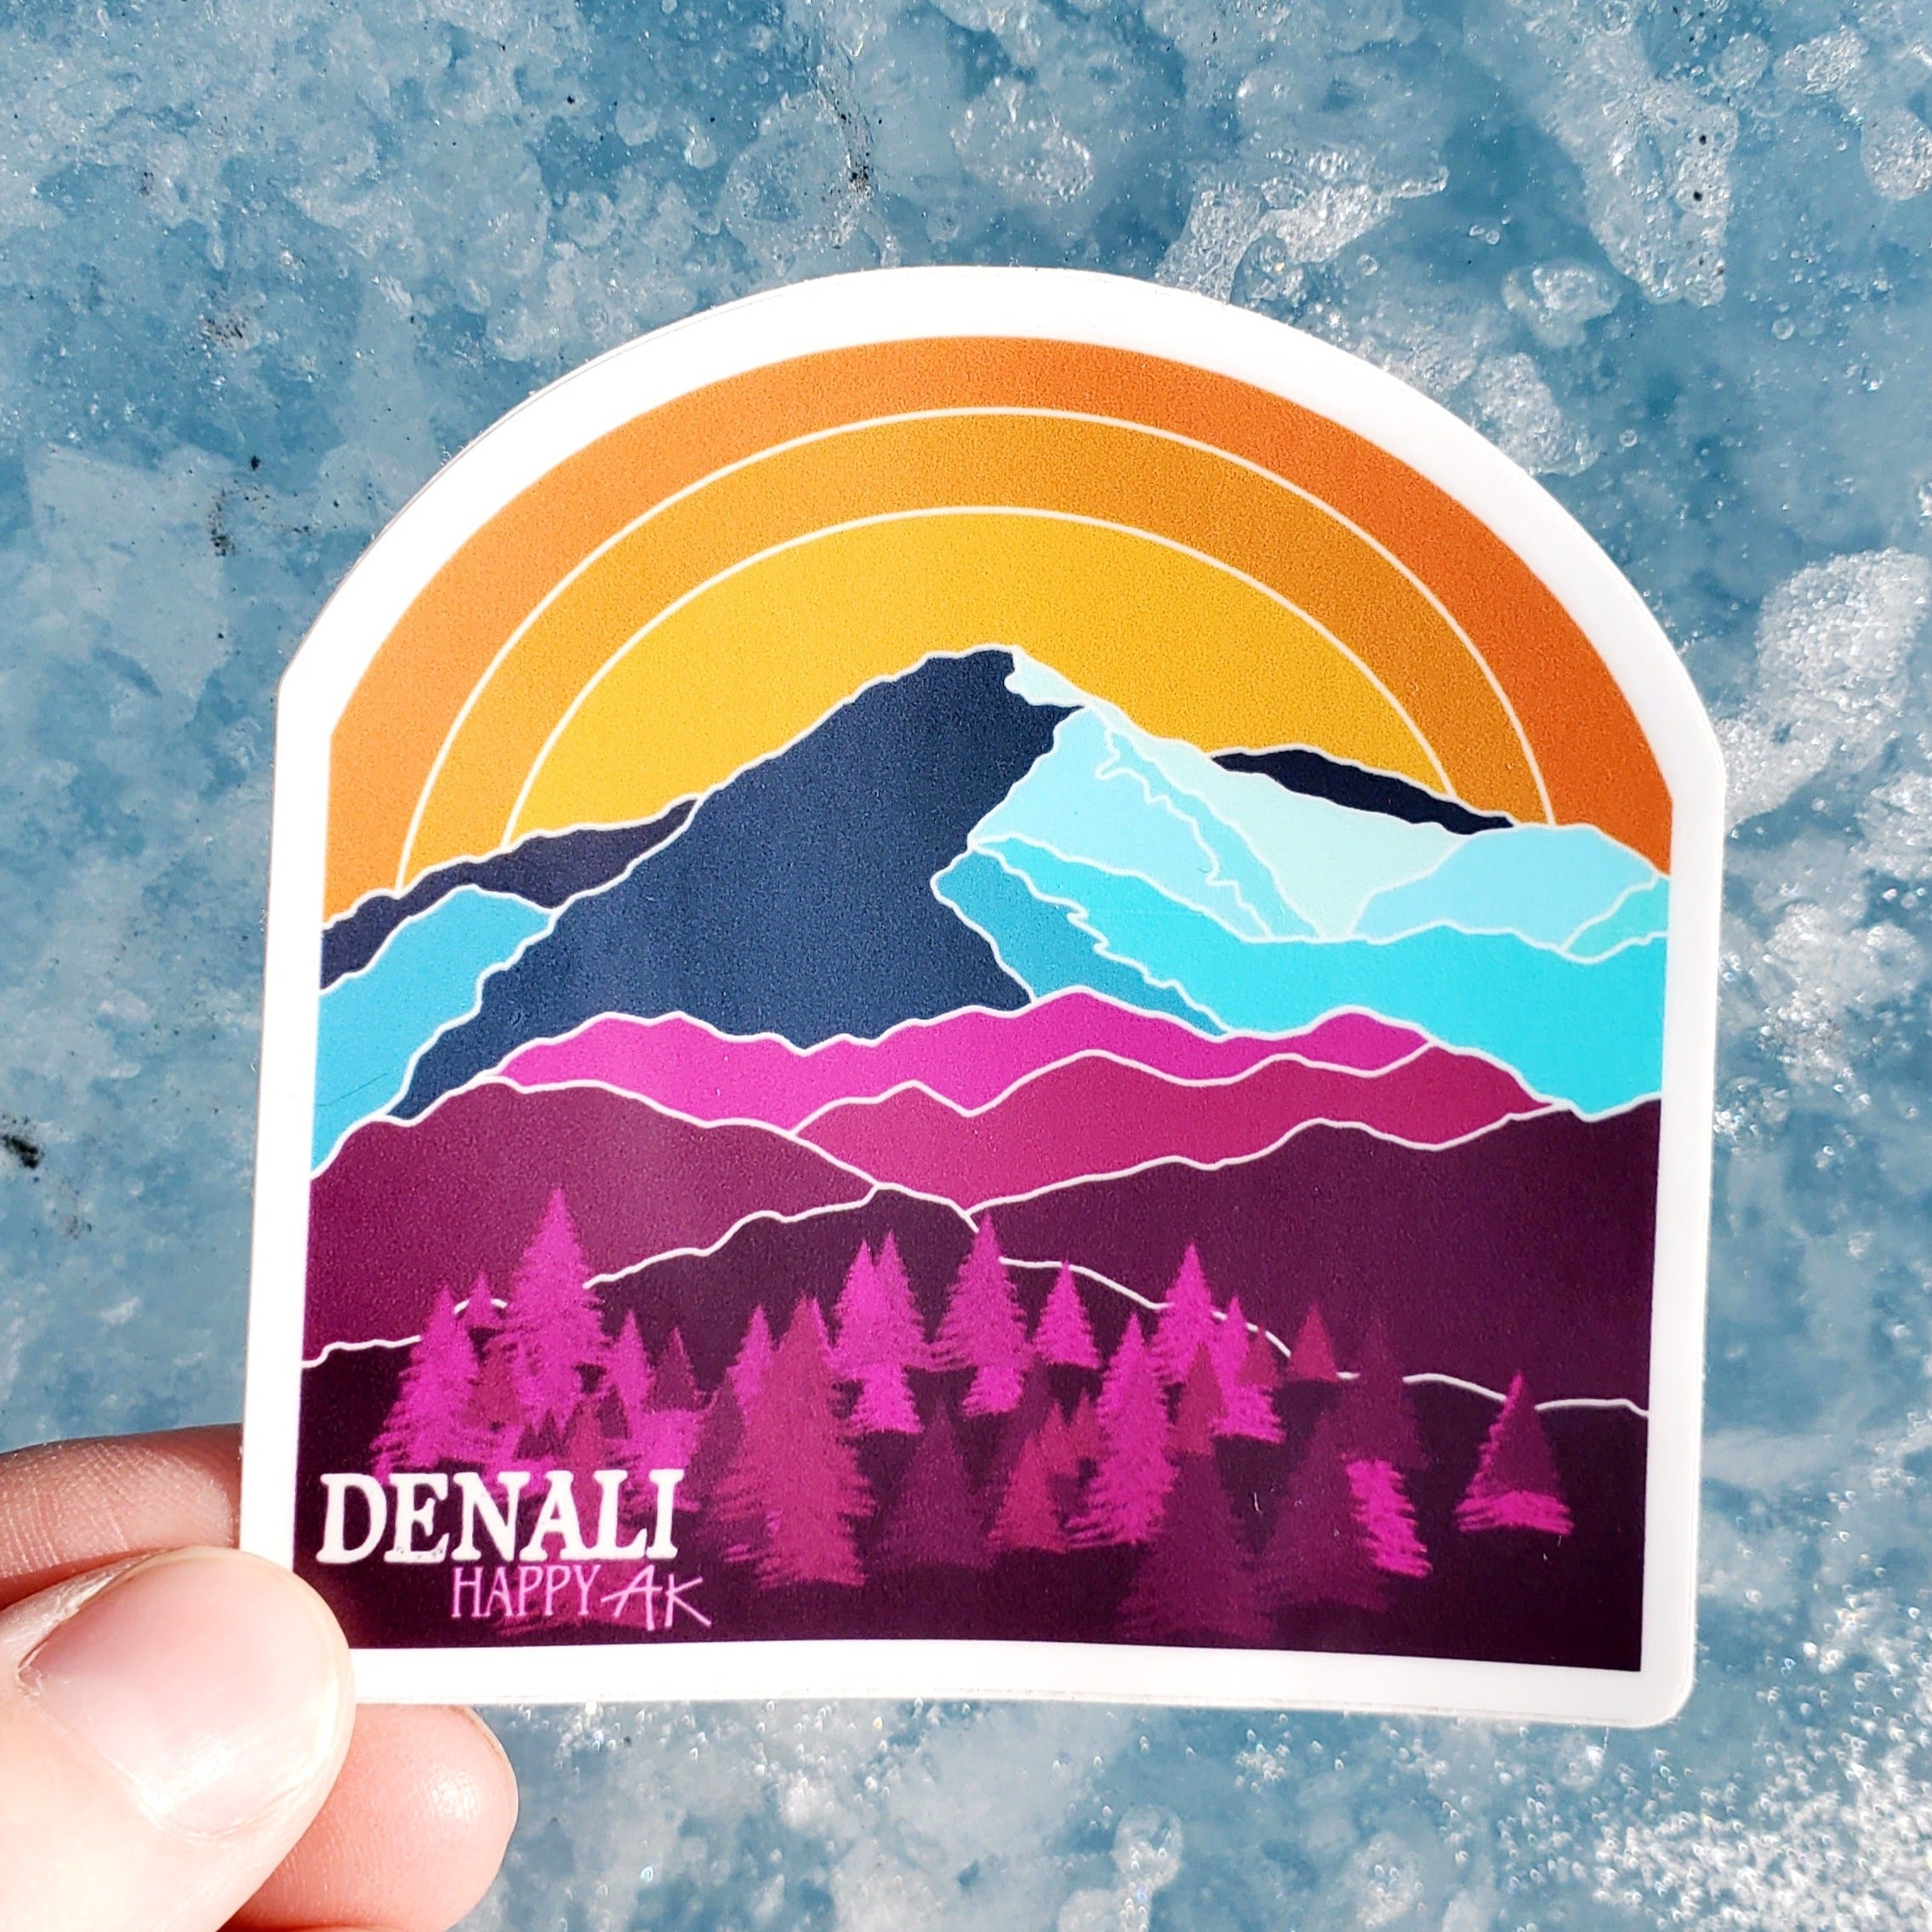 Denali & "Mountain Happy"